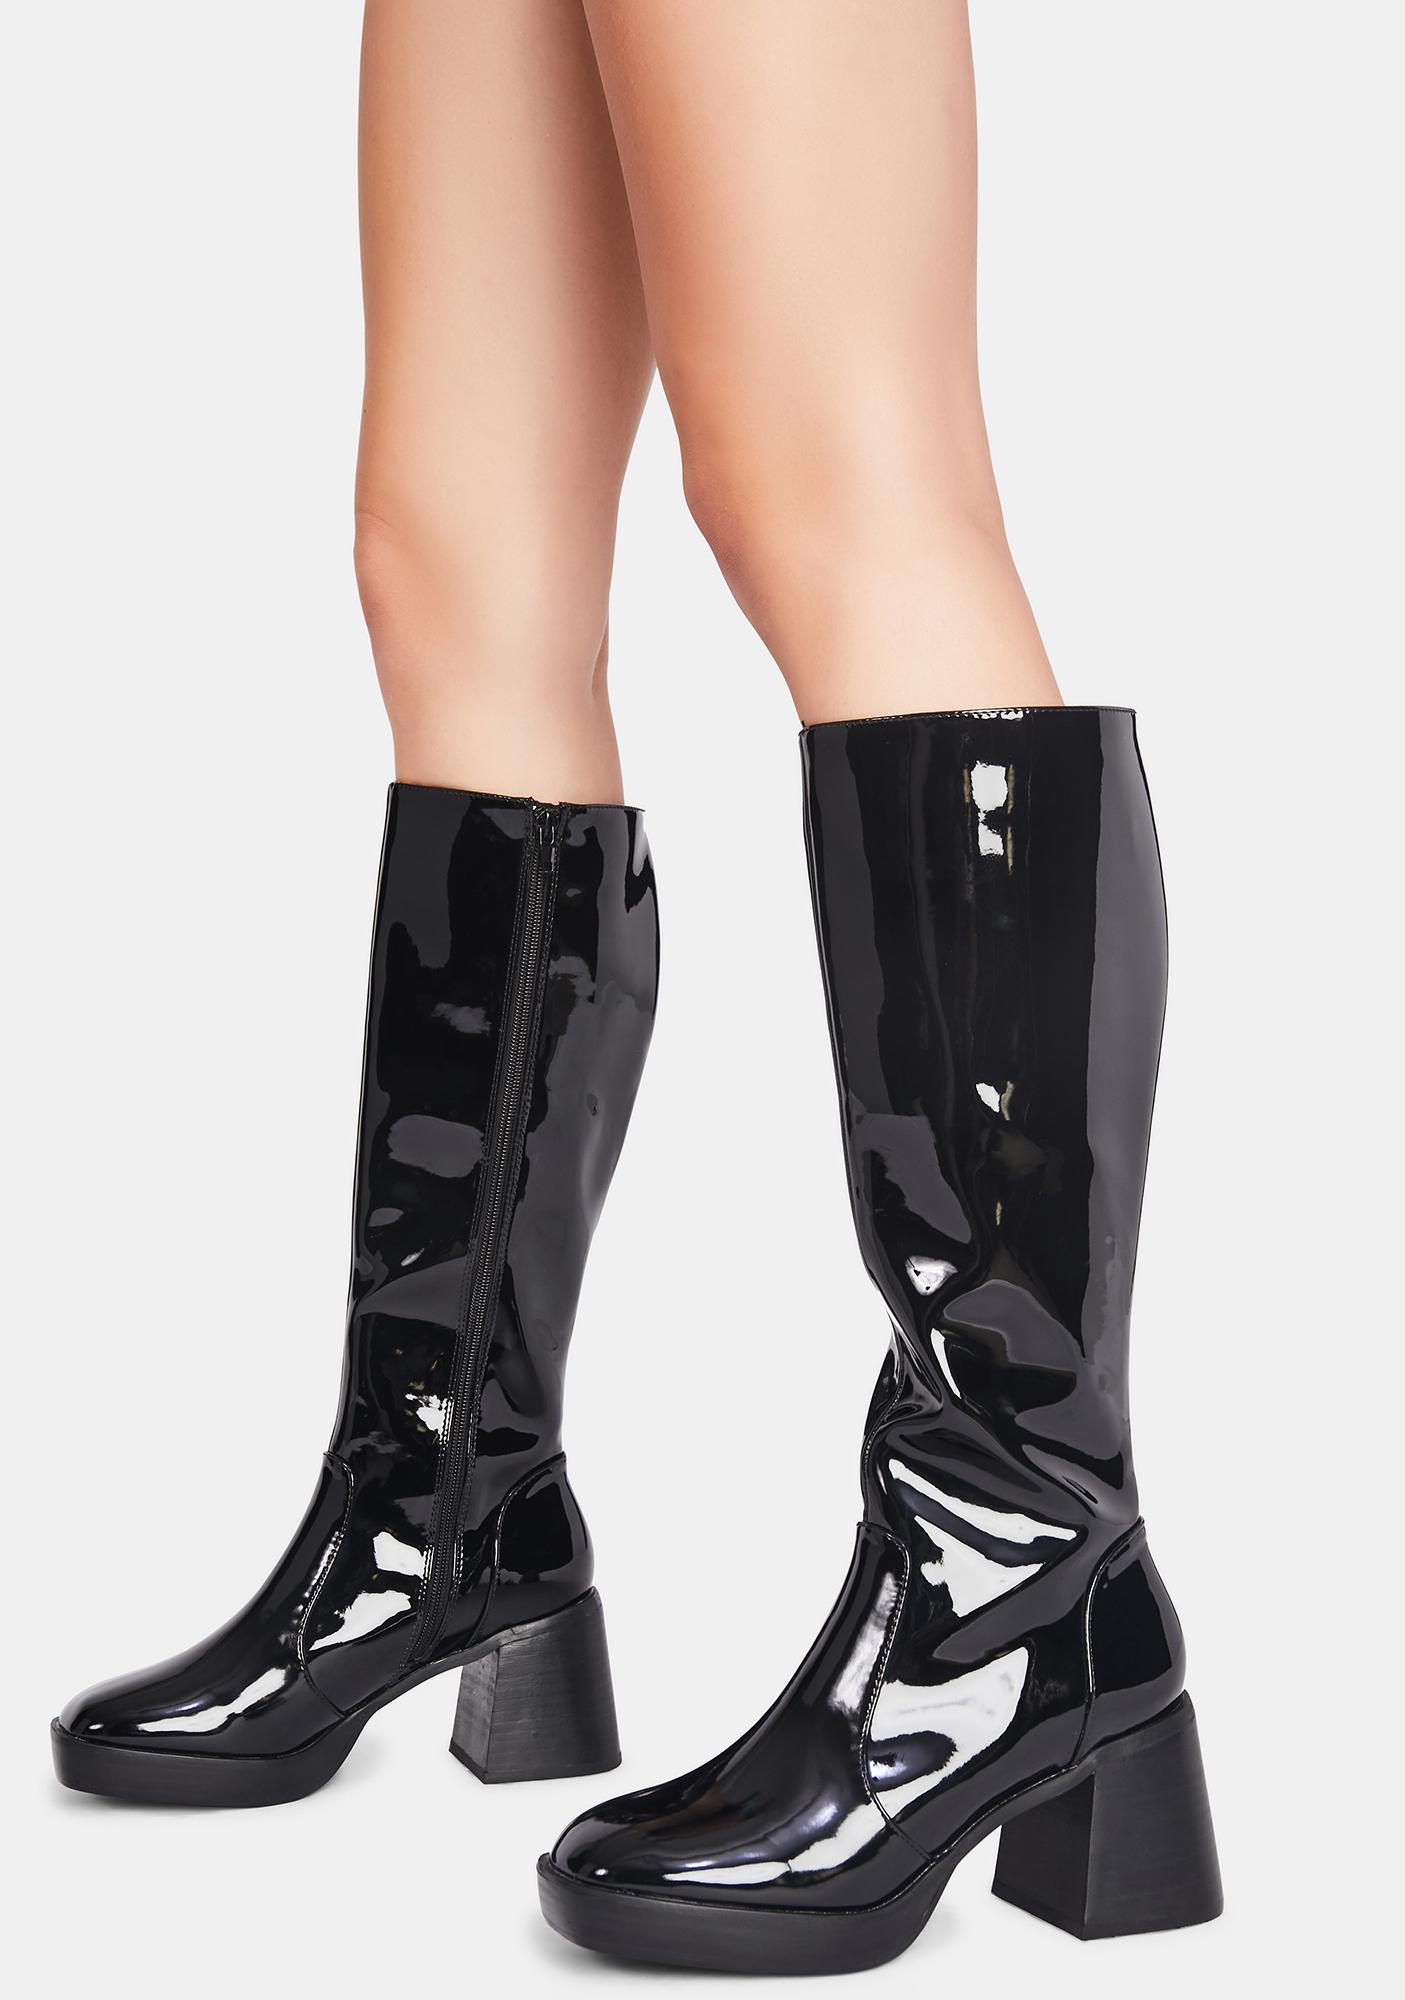 Delia's Patent Knee High Square Toe Platform Boots - Black | Dolls Kill